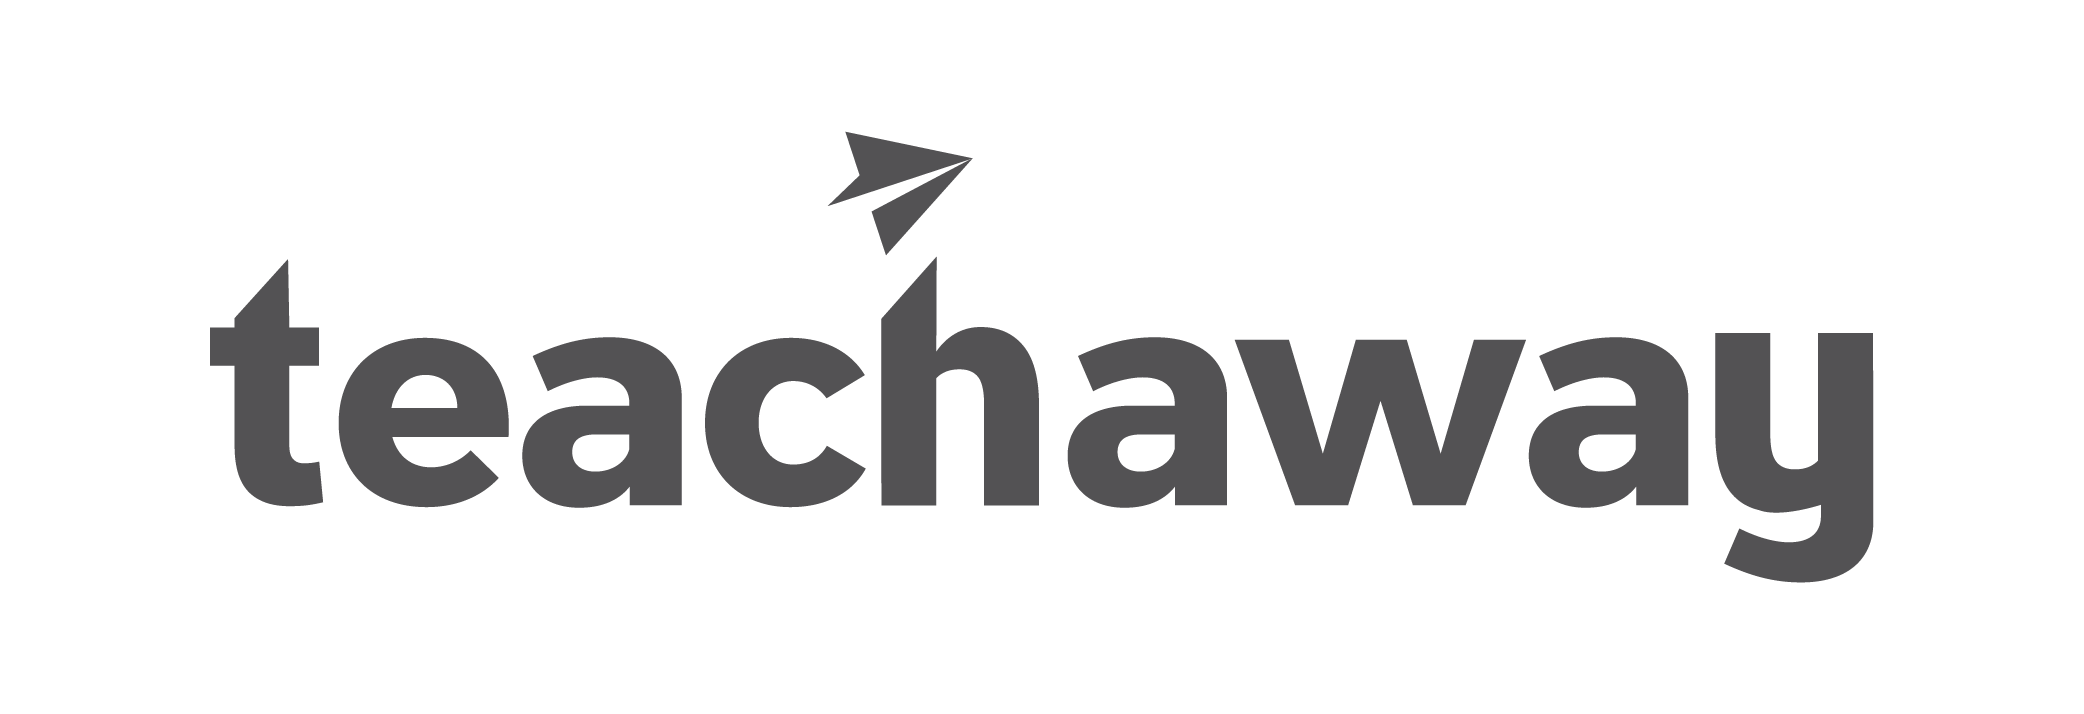 Teachaway_Logo_DkGray_RGB